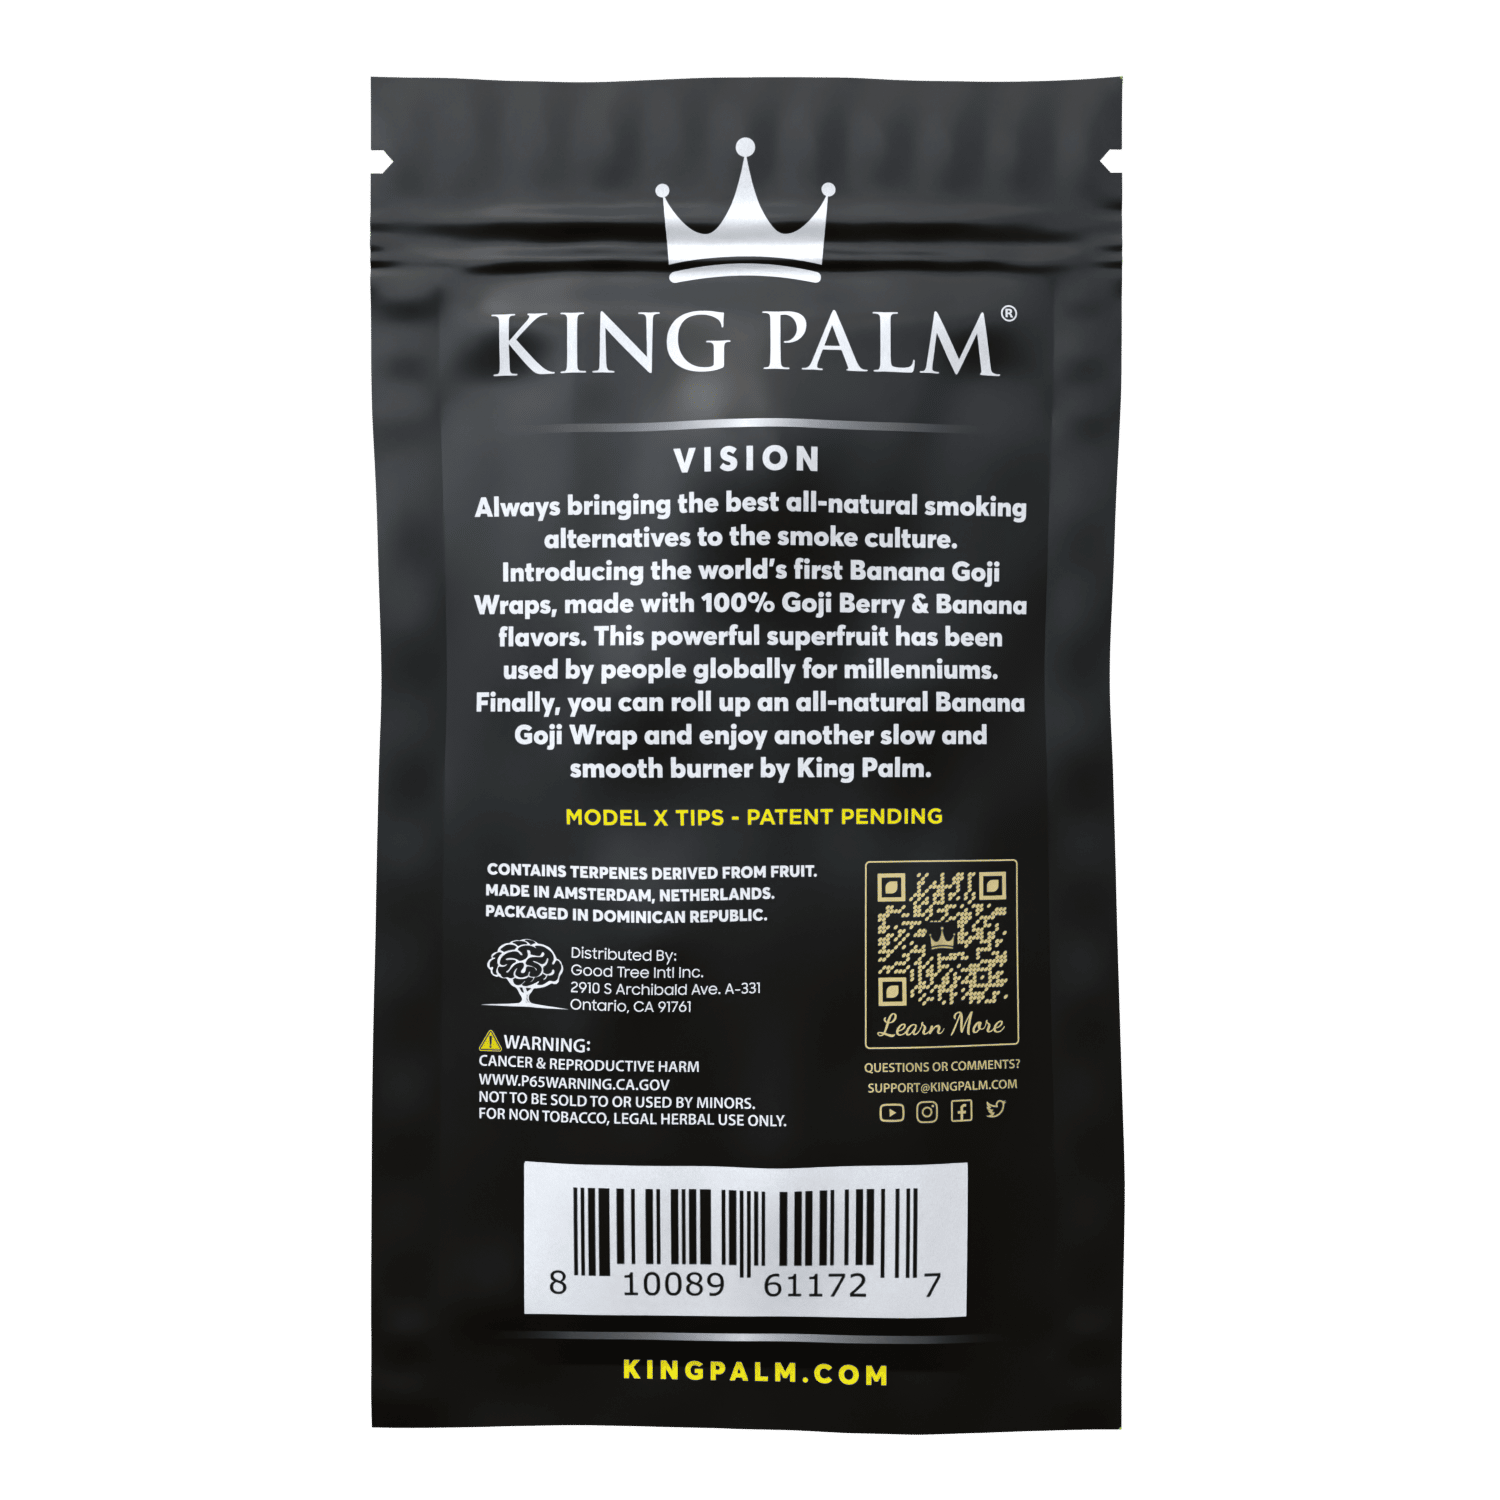 King Palm 4pk Goji Wraps 15 Pack - Banana King Palm